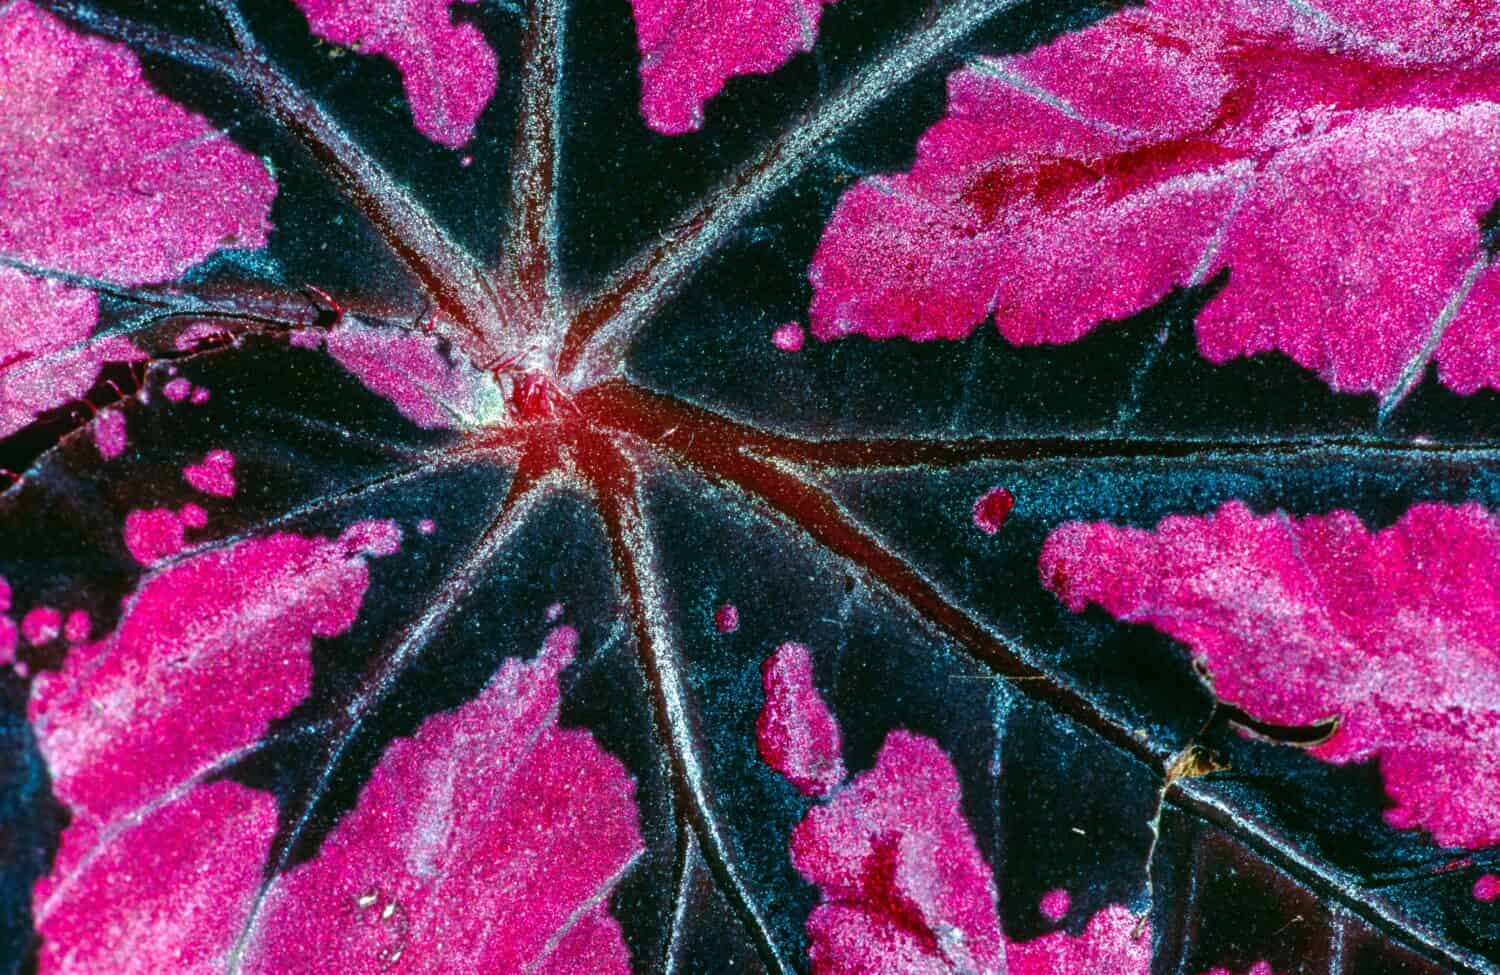 Closen up of a Begonia